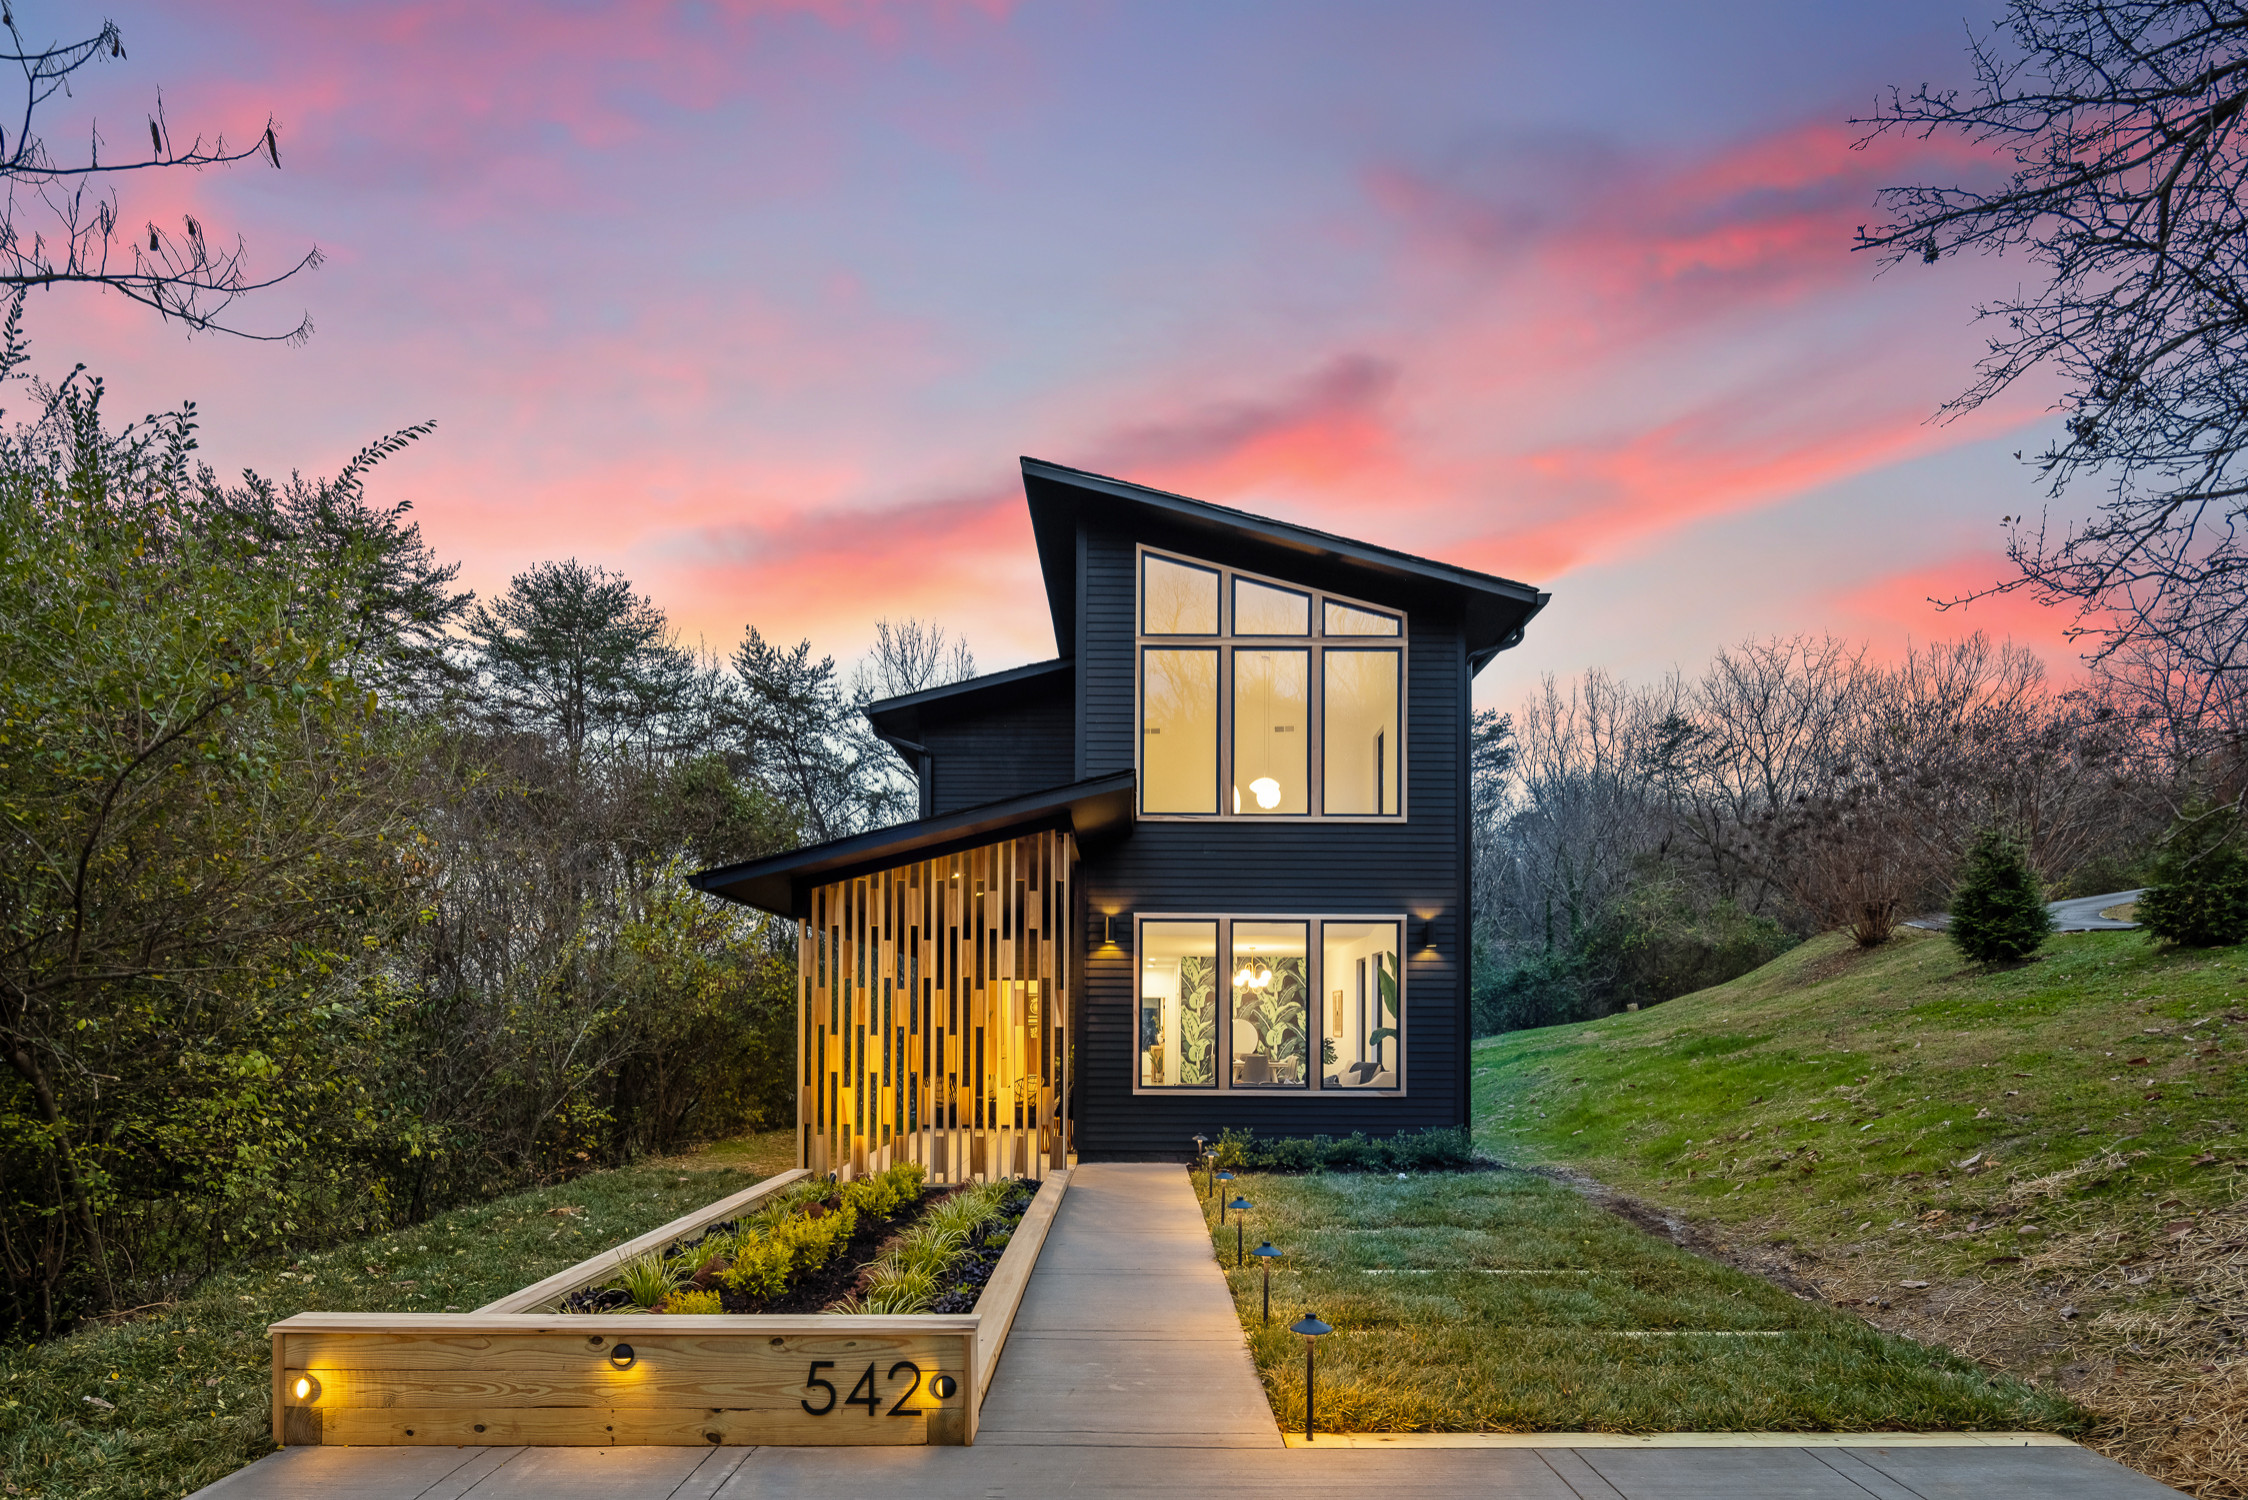 15 Magnificent Contemporary Home Designs - Part 1